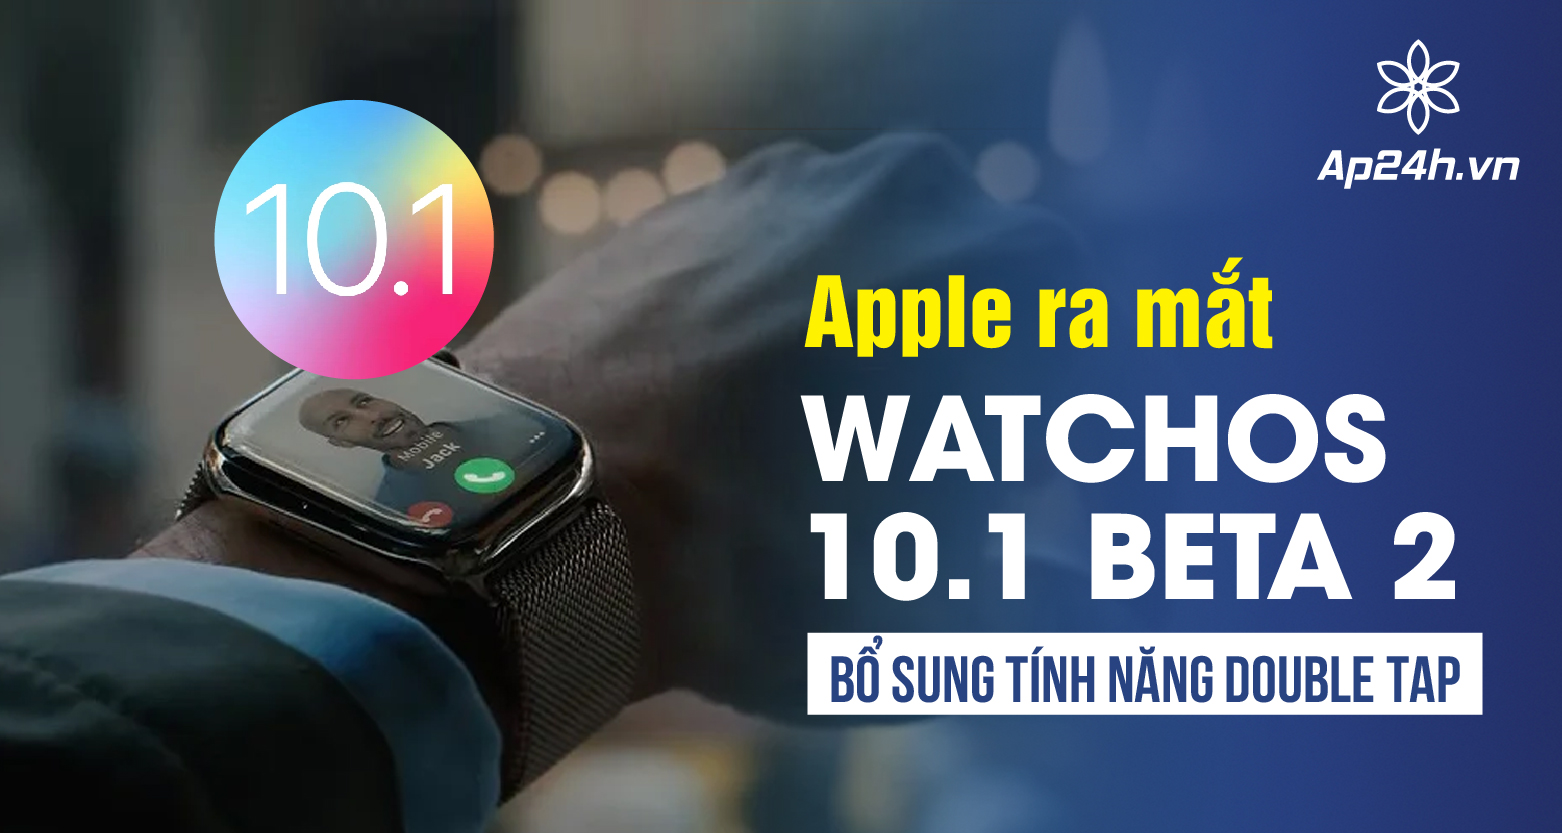  Apple watchOS 10.1 Beta 2